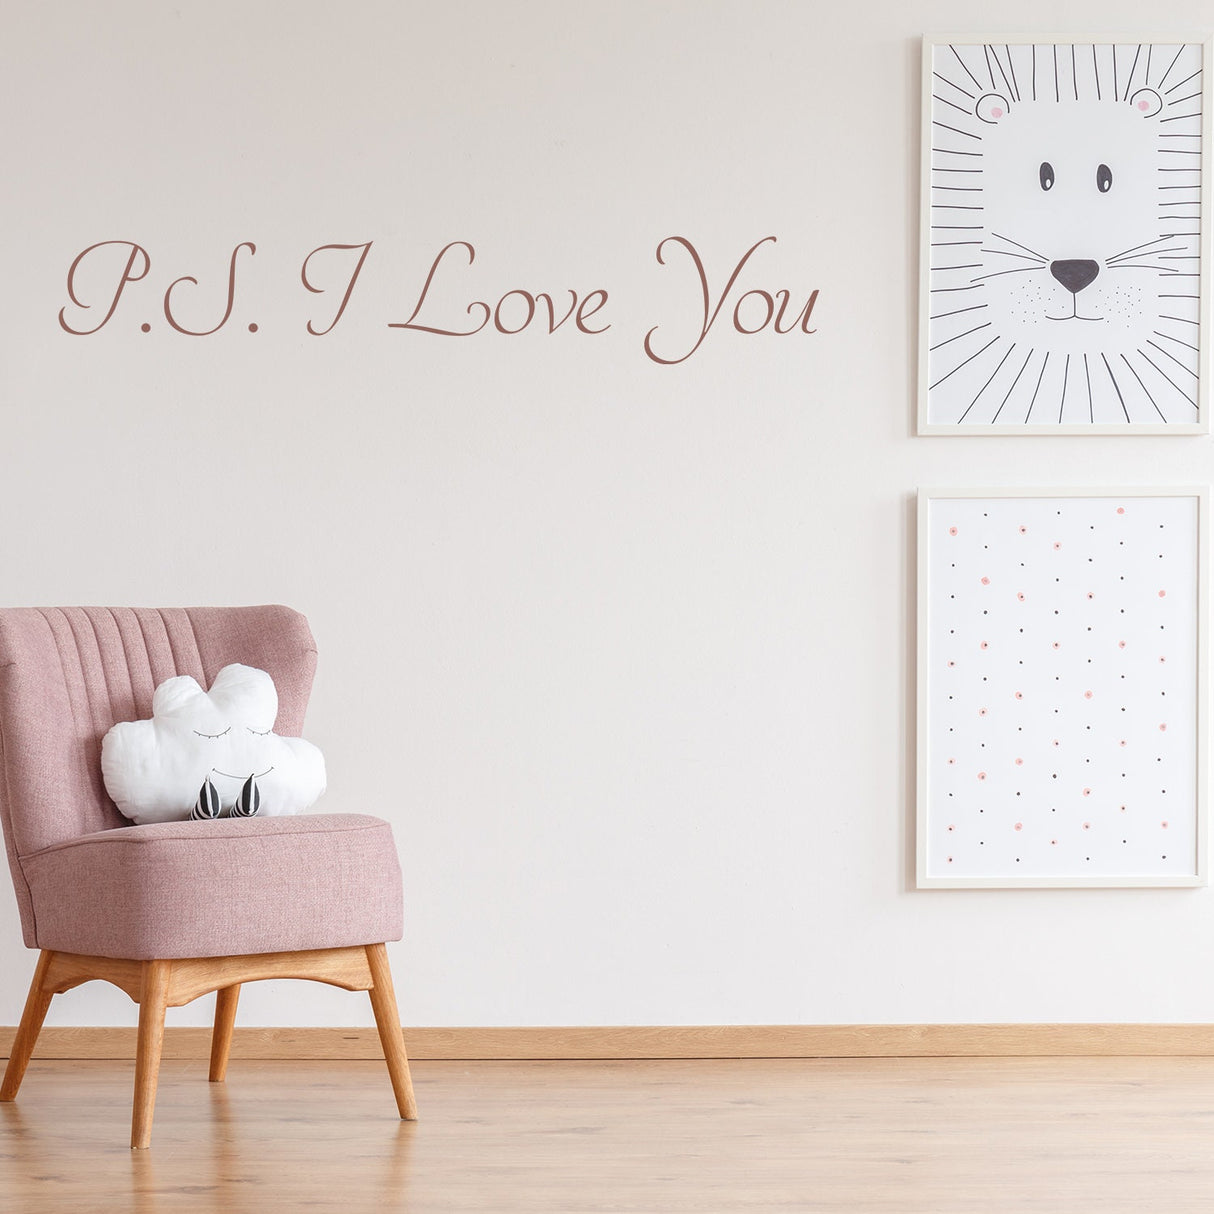 Ps I Love You Wall  Sticker - Romantic Bedroom Quote Decor Art Vinyl Decal